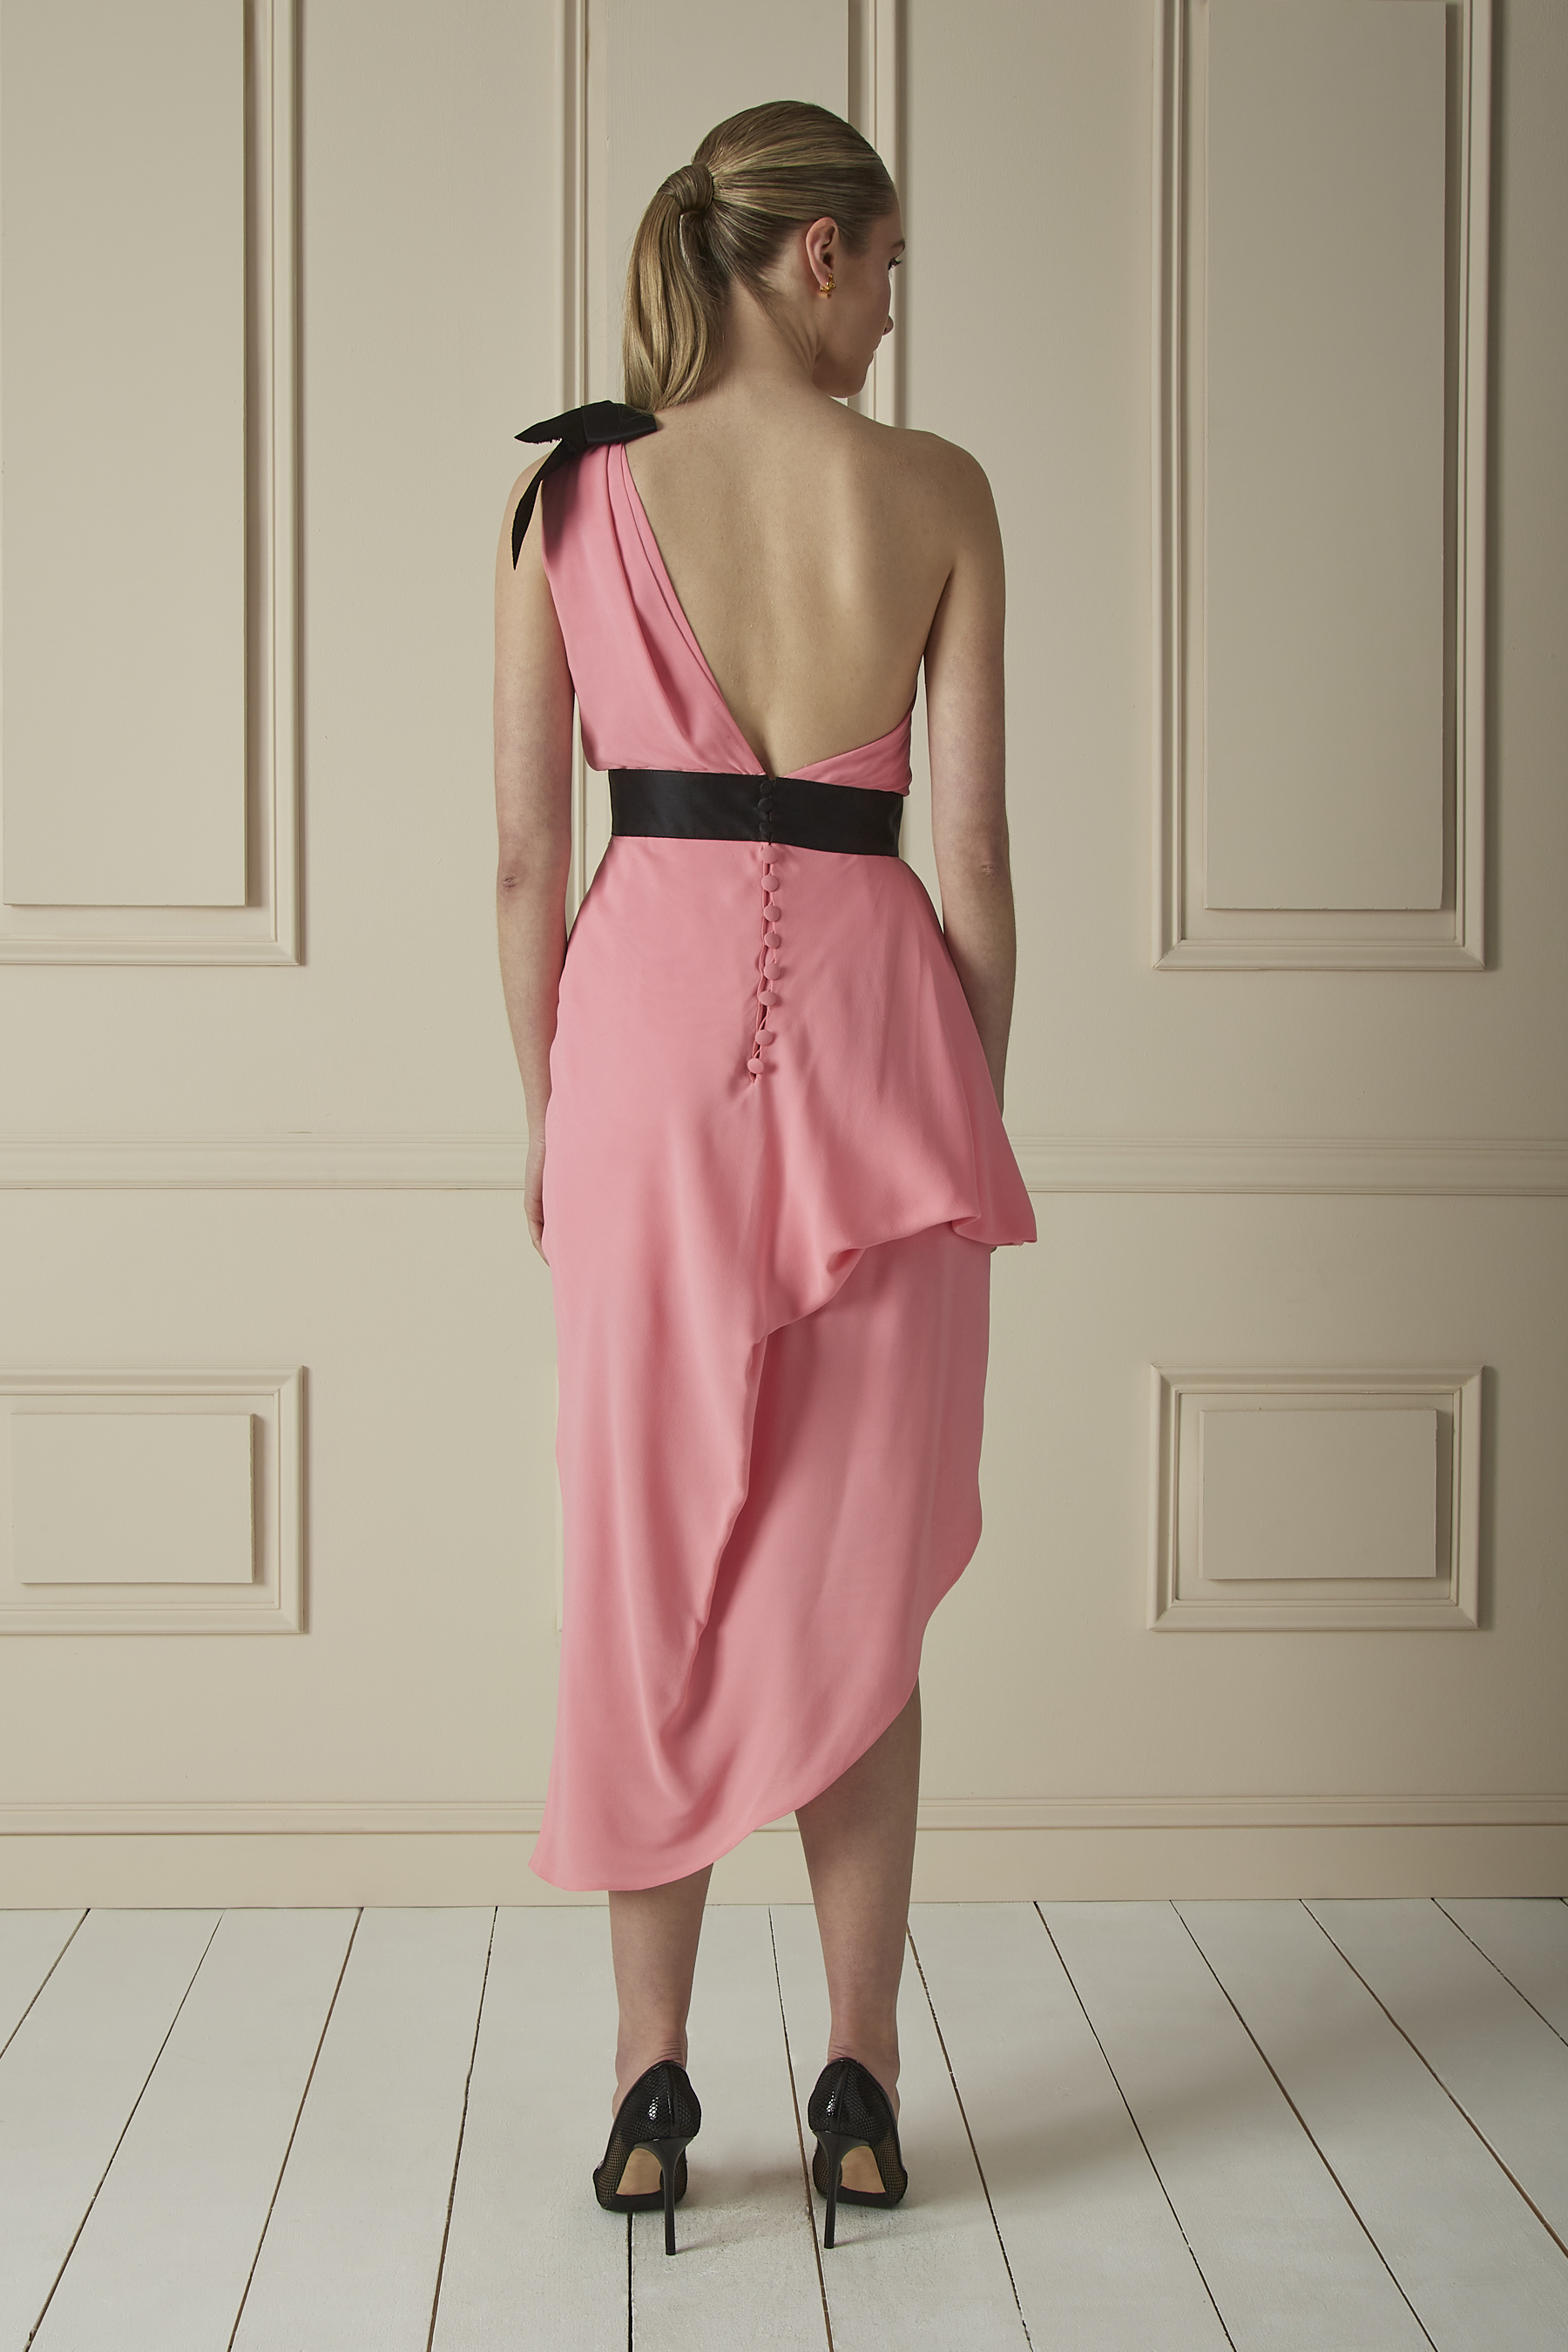 Chanel Pink and Black Silk Dress 60CHW-111